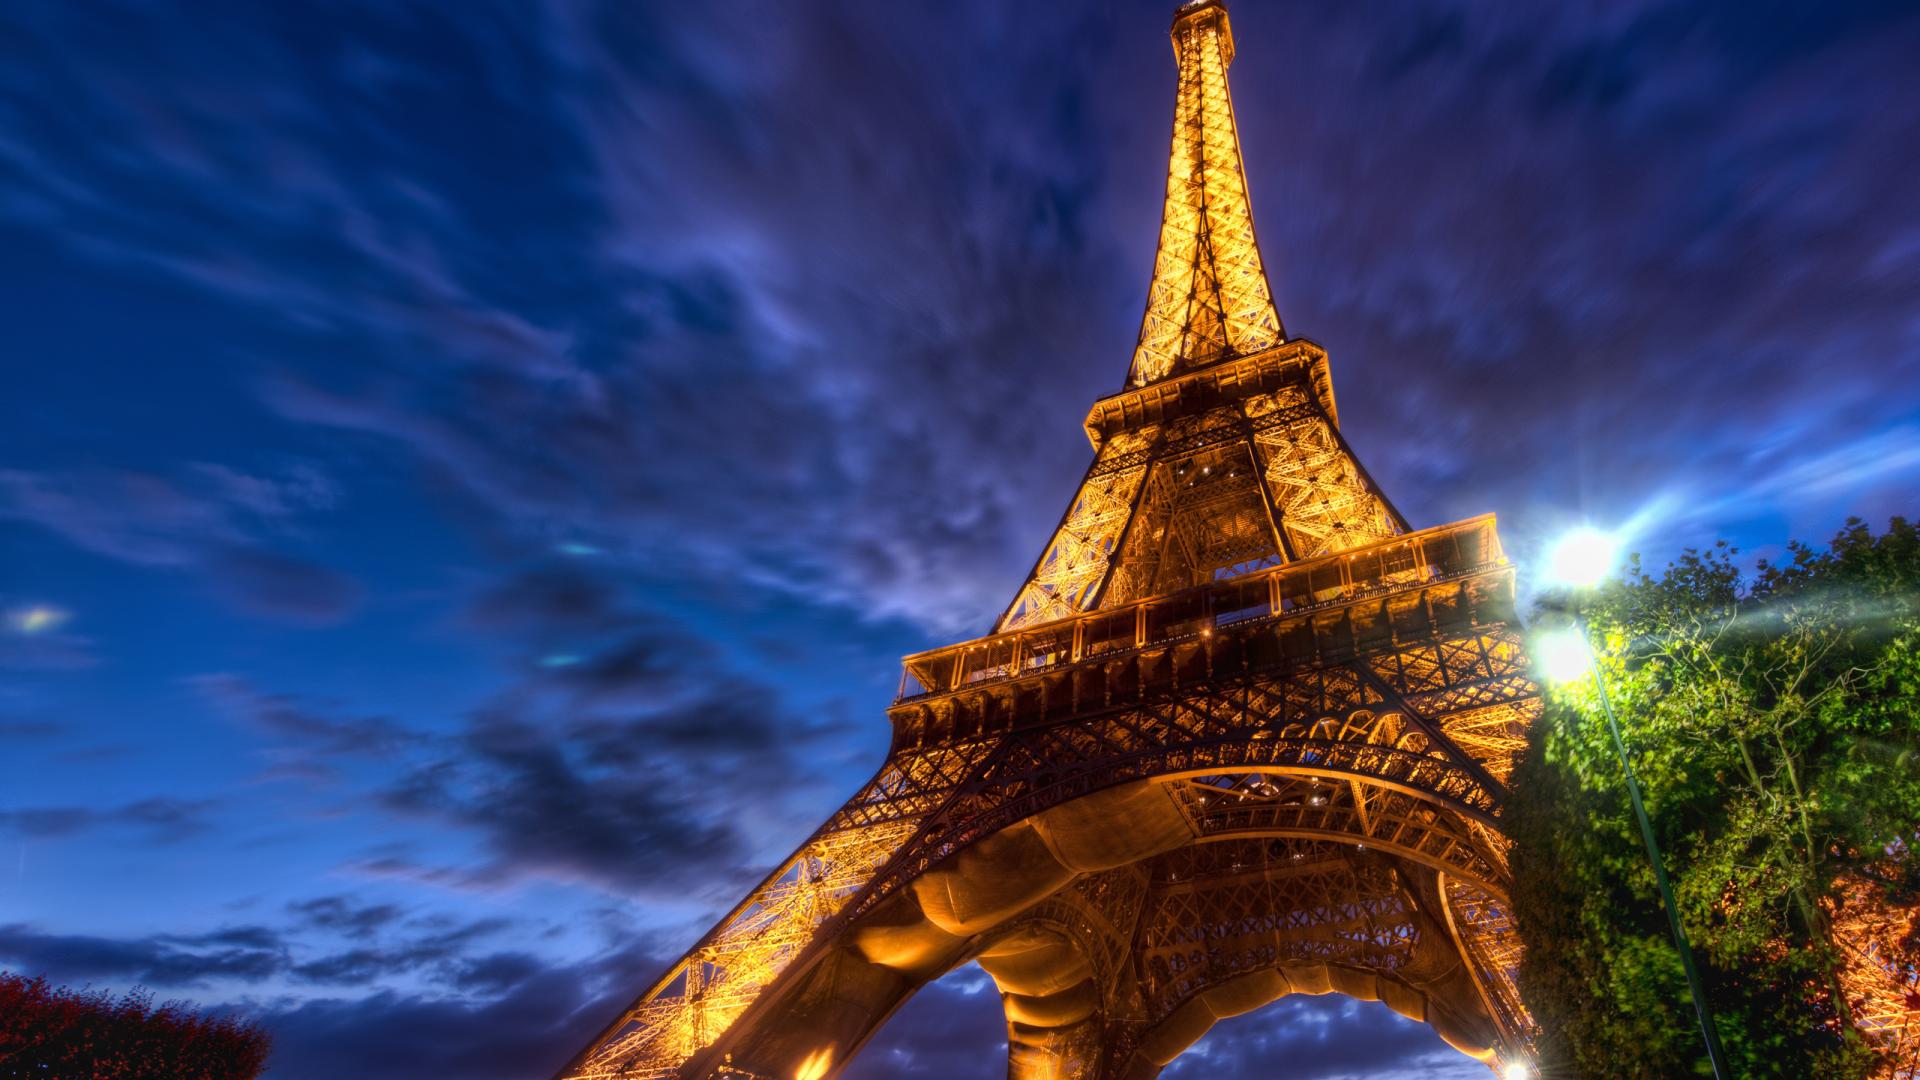 Eiffel Tower cool wallpapers hd 1080p widescreen